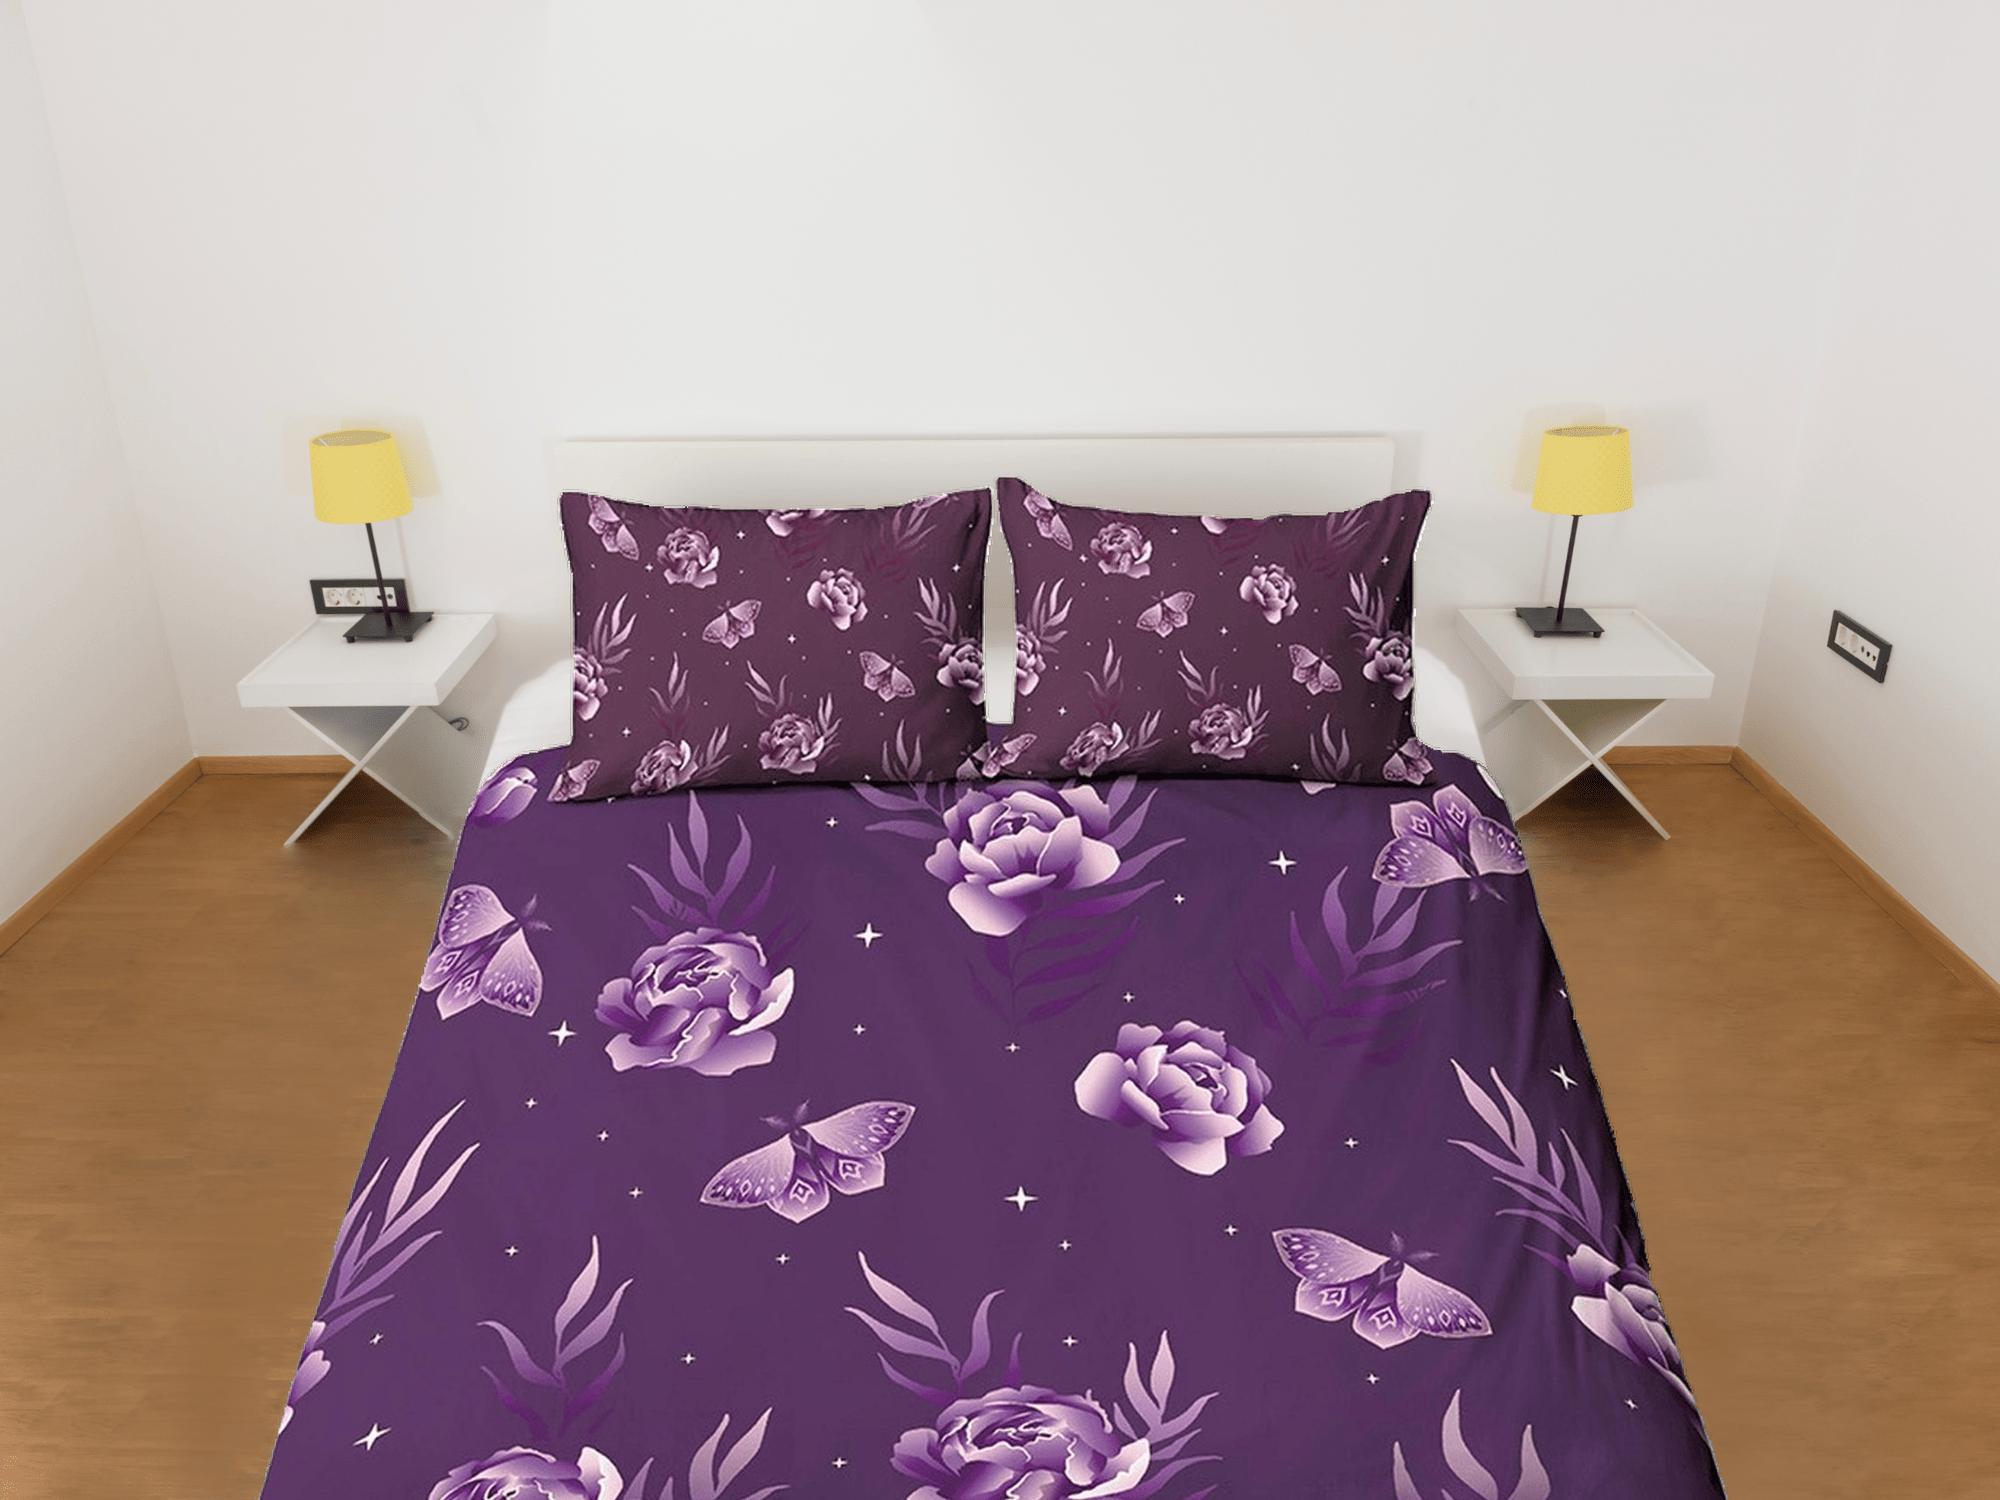 daintyduvet Celestial purple bedding luna moth, witchy decor dorm bedding, aesthetic duvet, boho bedding set full king queen, astrology gifts, gothic